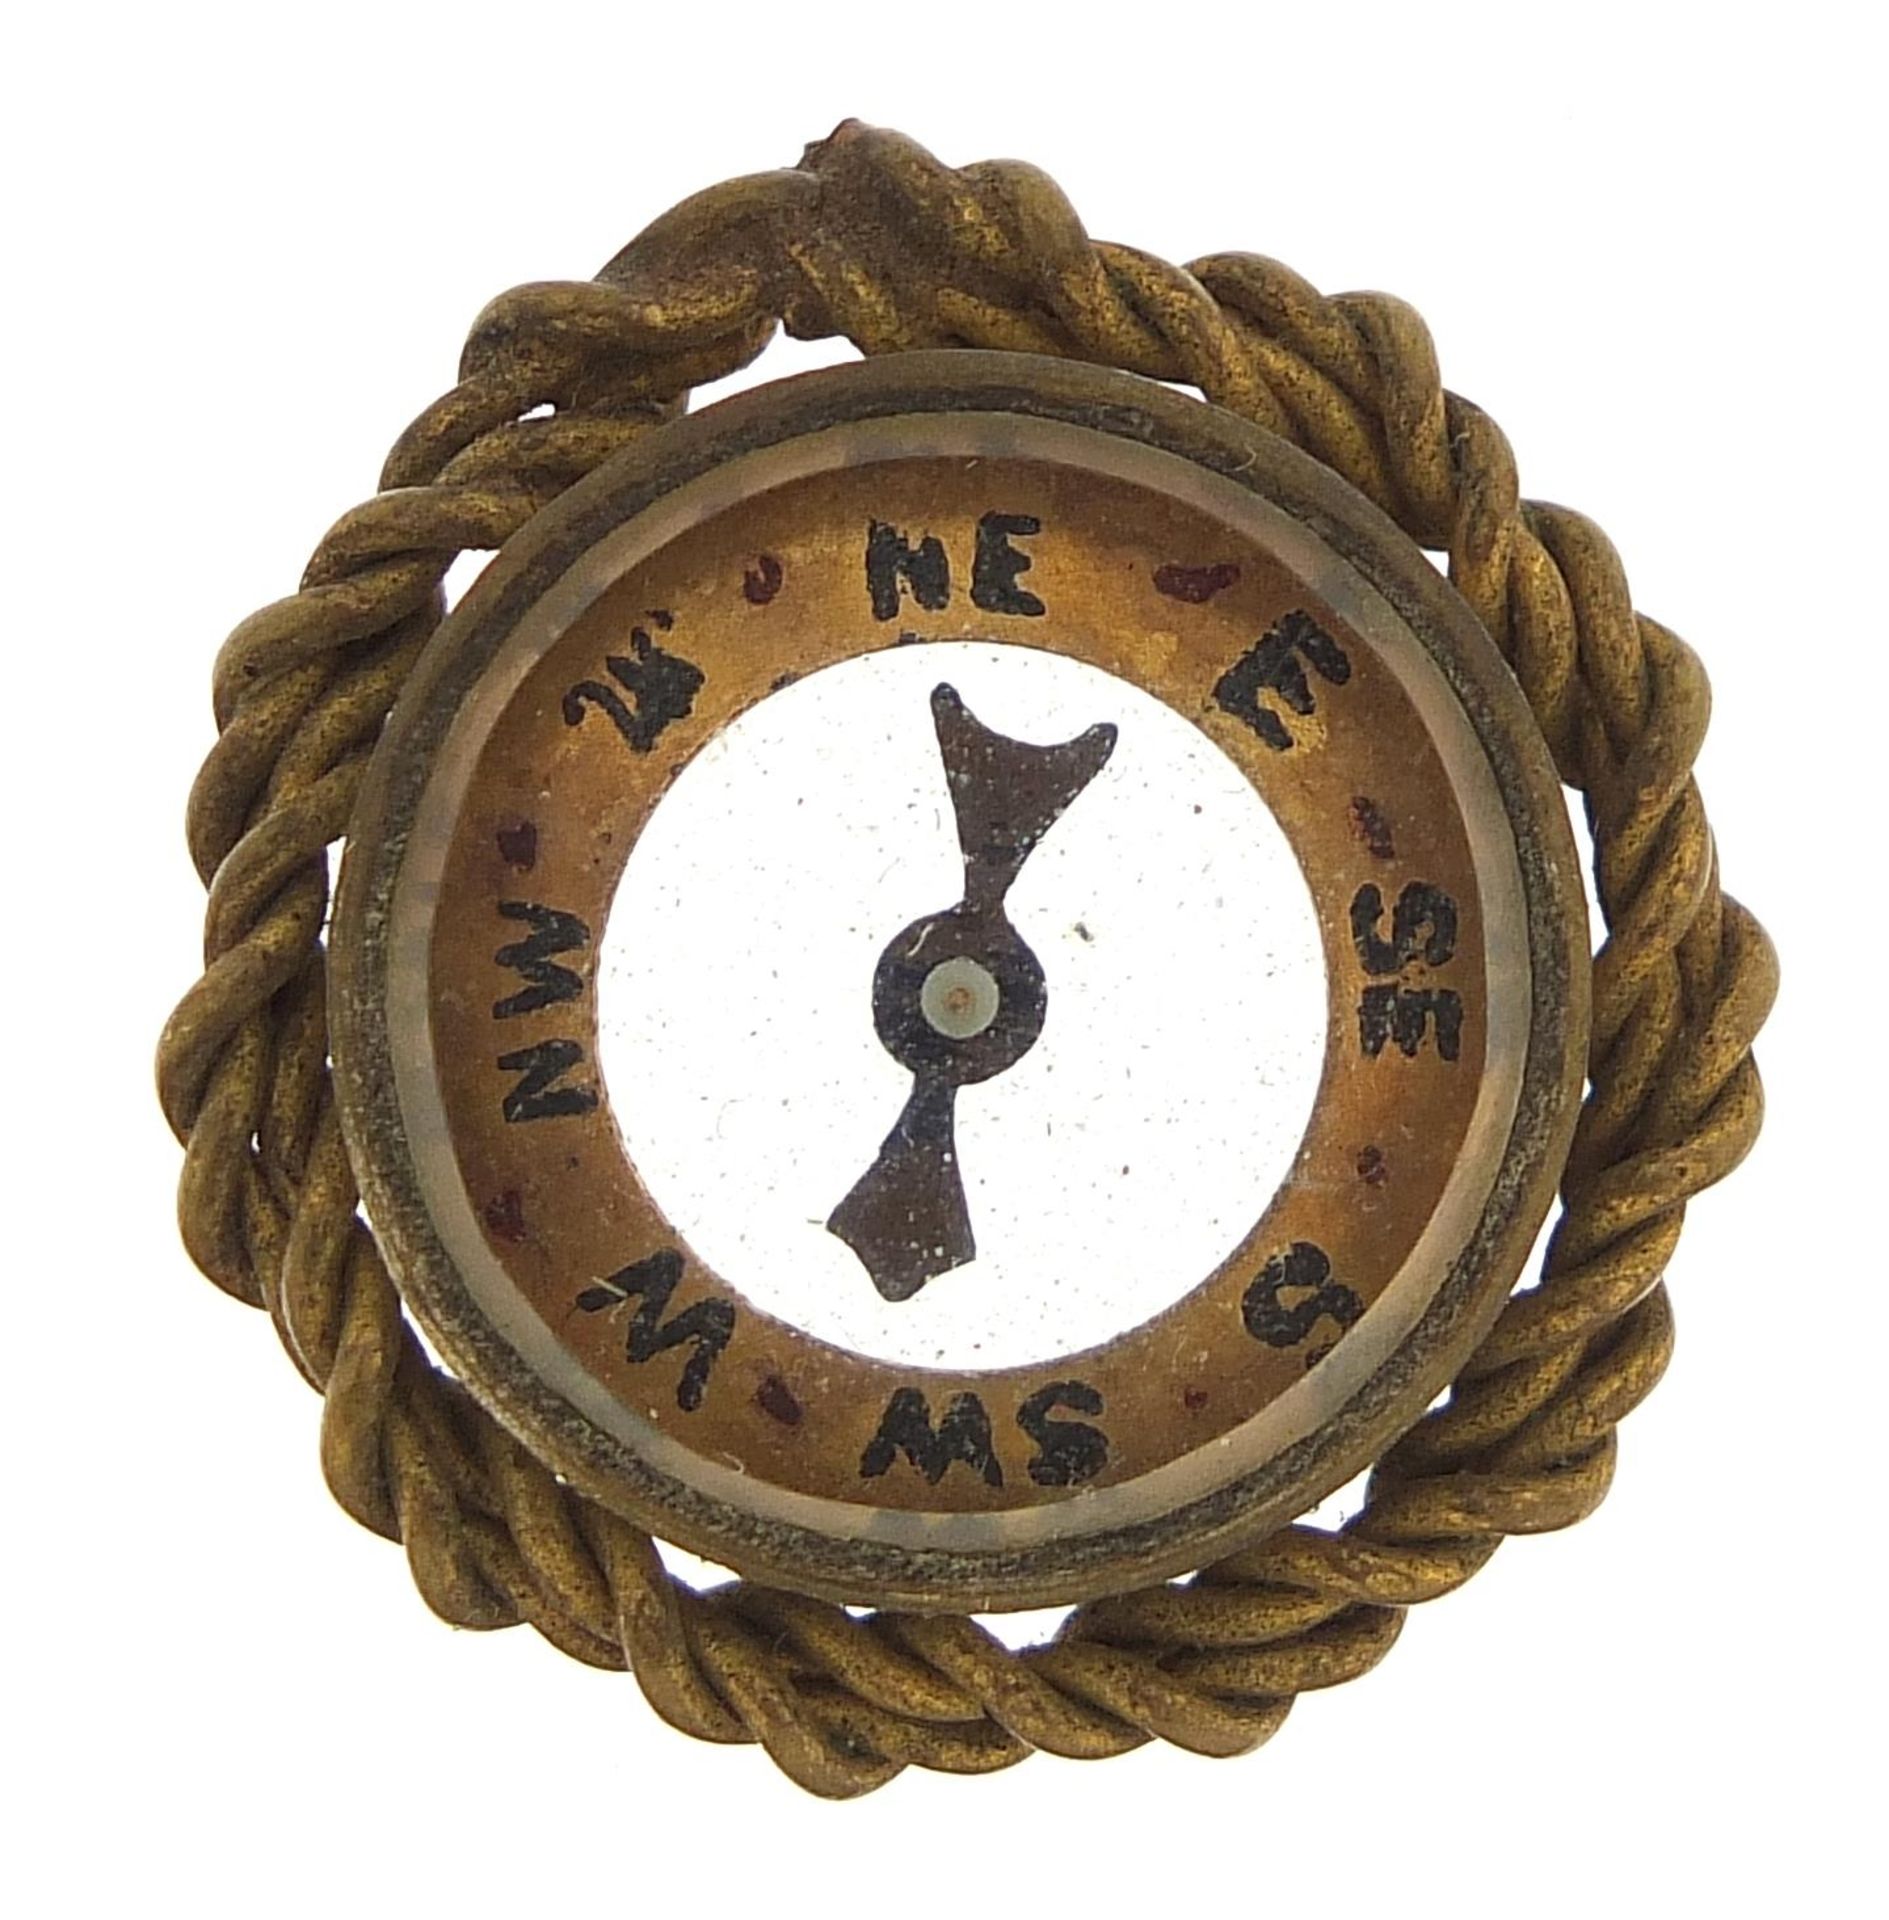 Gilt metal compass, 2.1cm in diameter, 4.0g